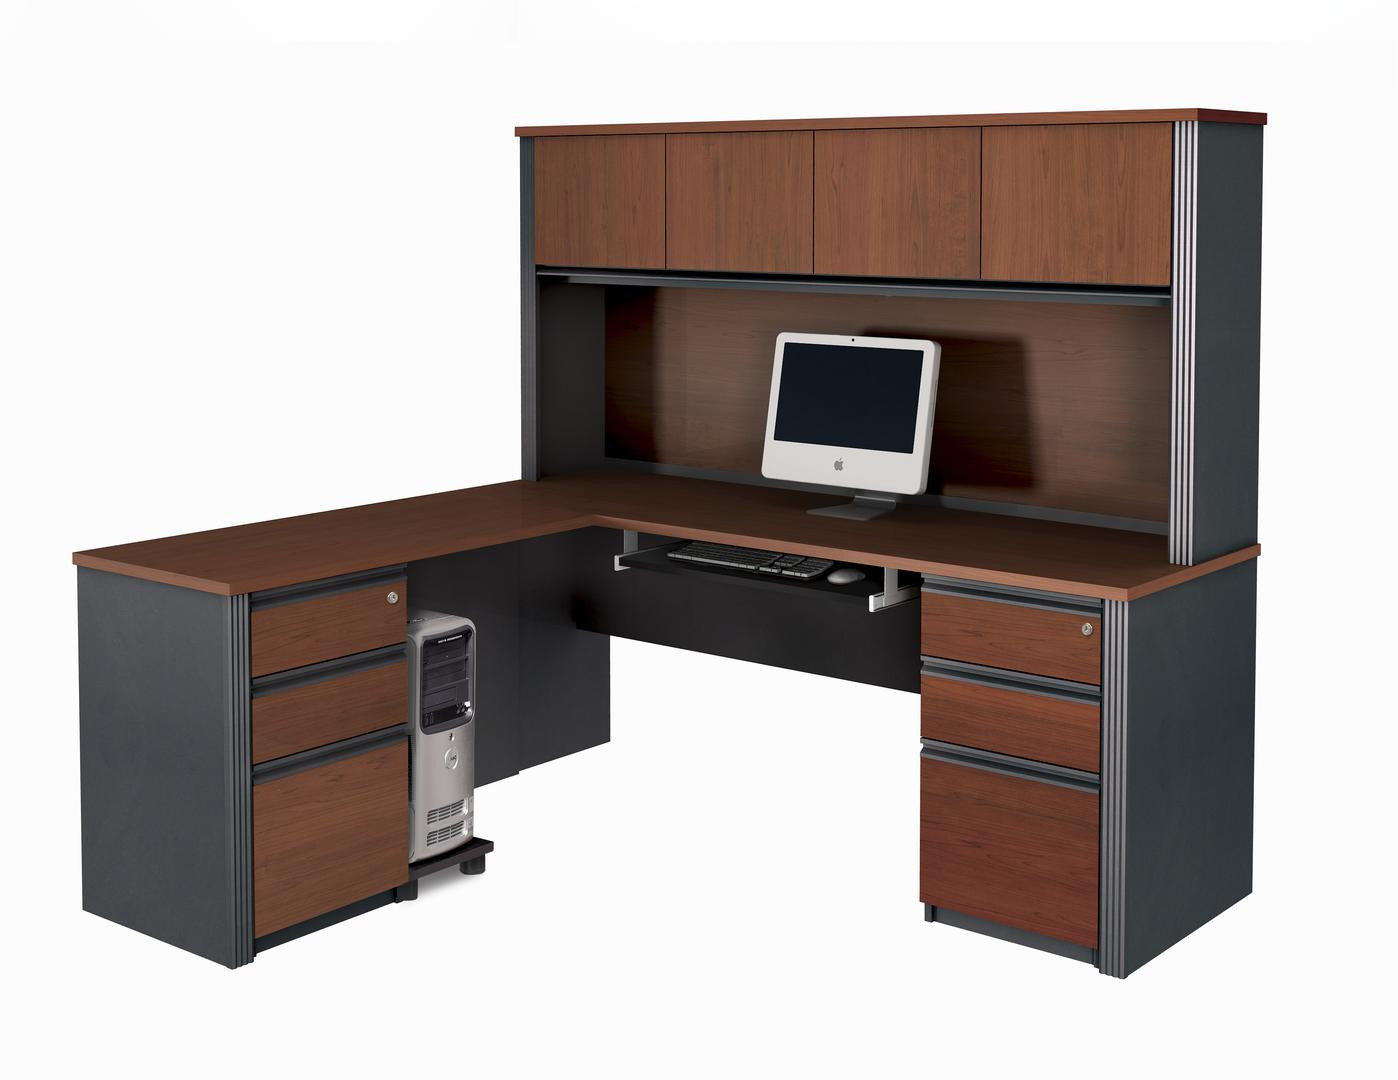 Best ideas about Bestar Office Furniture
. Save or Pin Bestar Furniture Modern L Shape fice Desk Now.